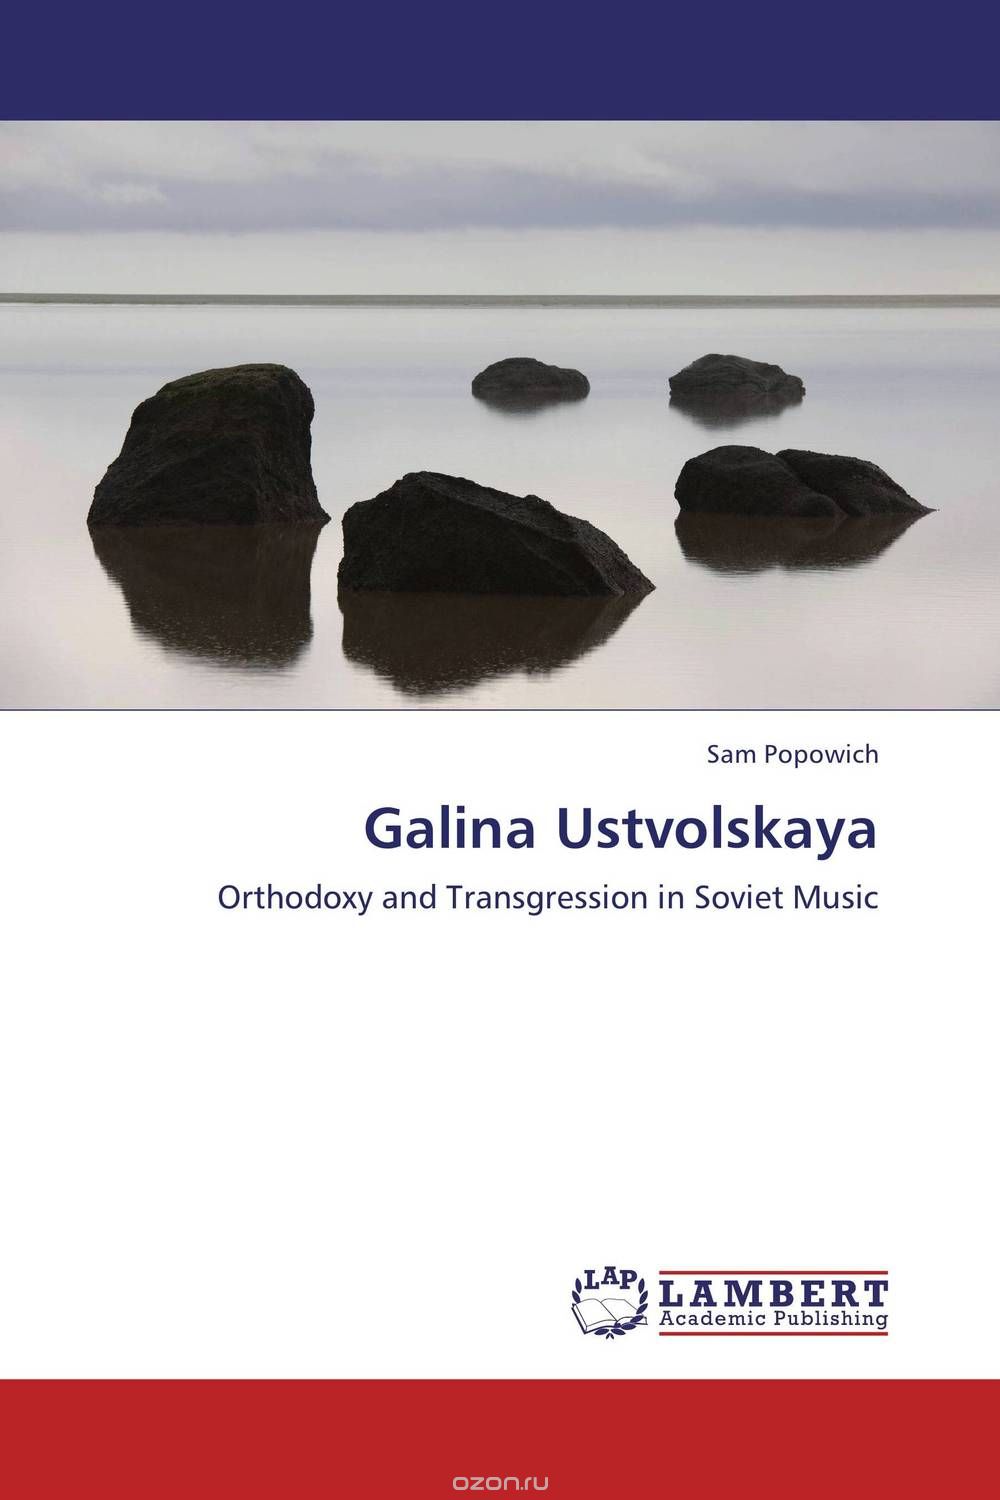 Скачать книгу "Galina Ustvolskaya"